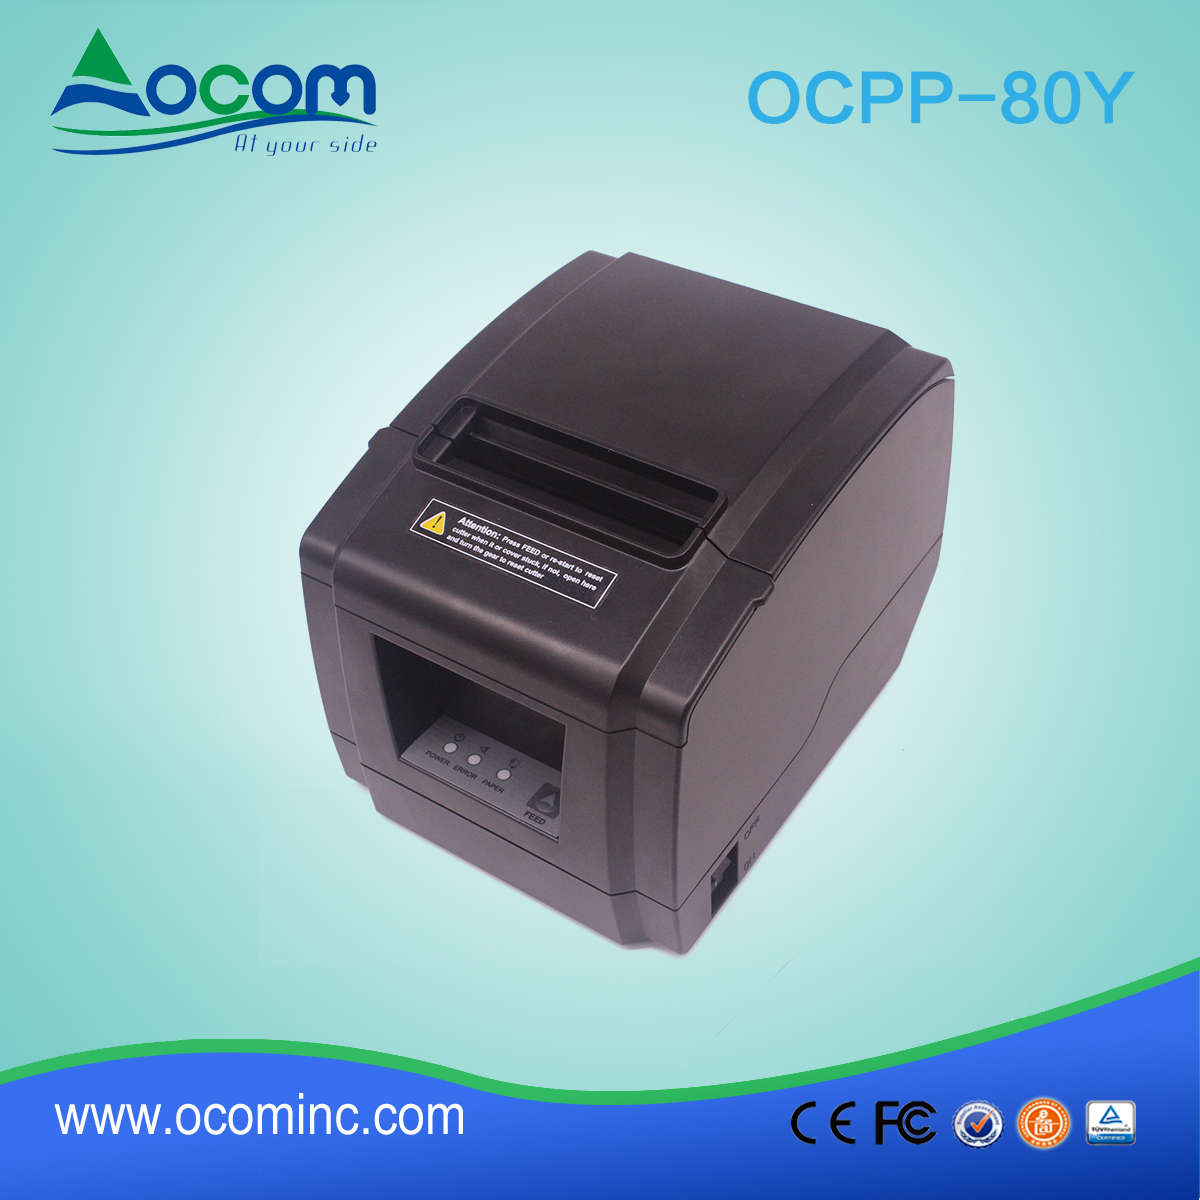 OCPP-80Y Low cost 80mm Thermal Receipt Printer